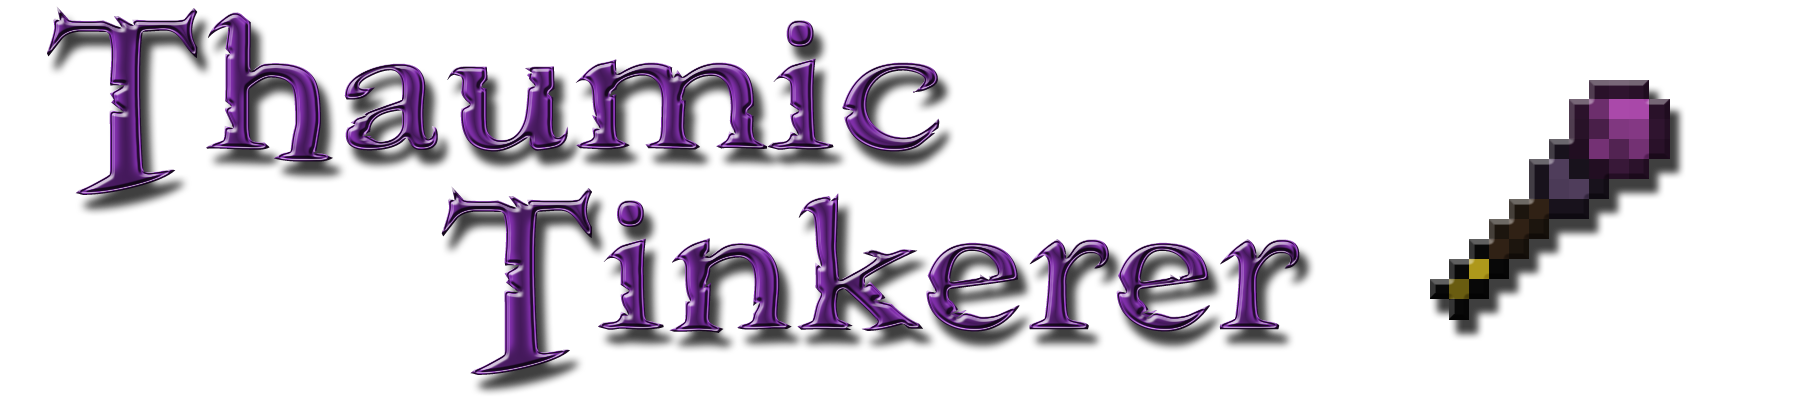 Thaumic Tinkerer: расширение магии и исследований